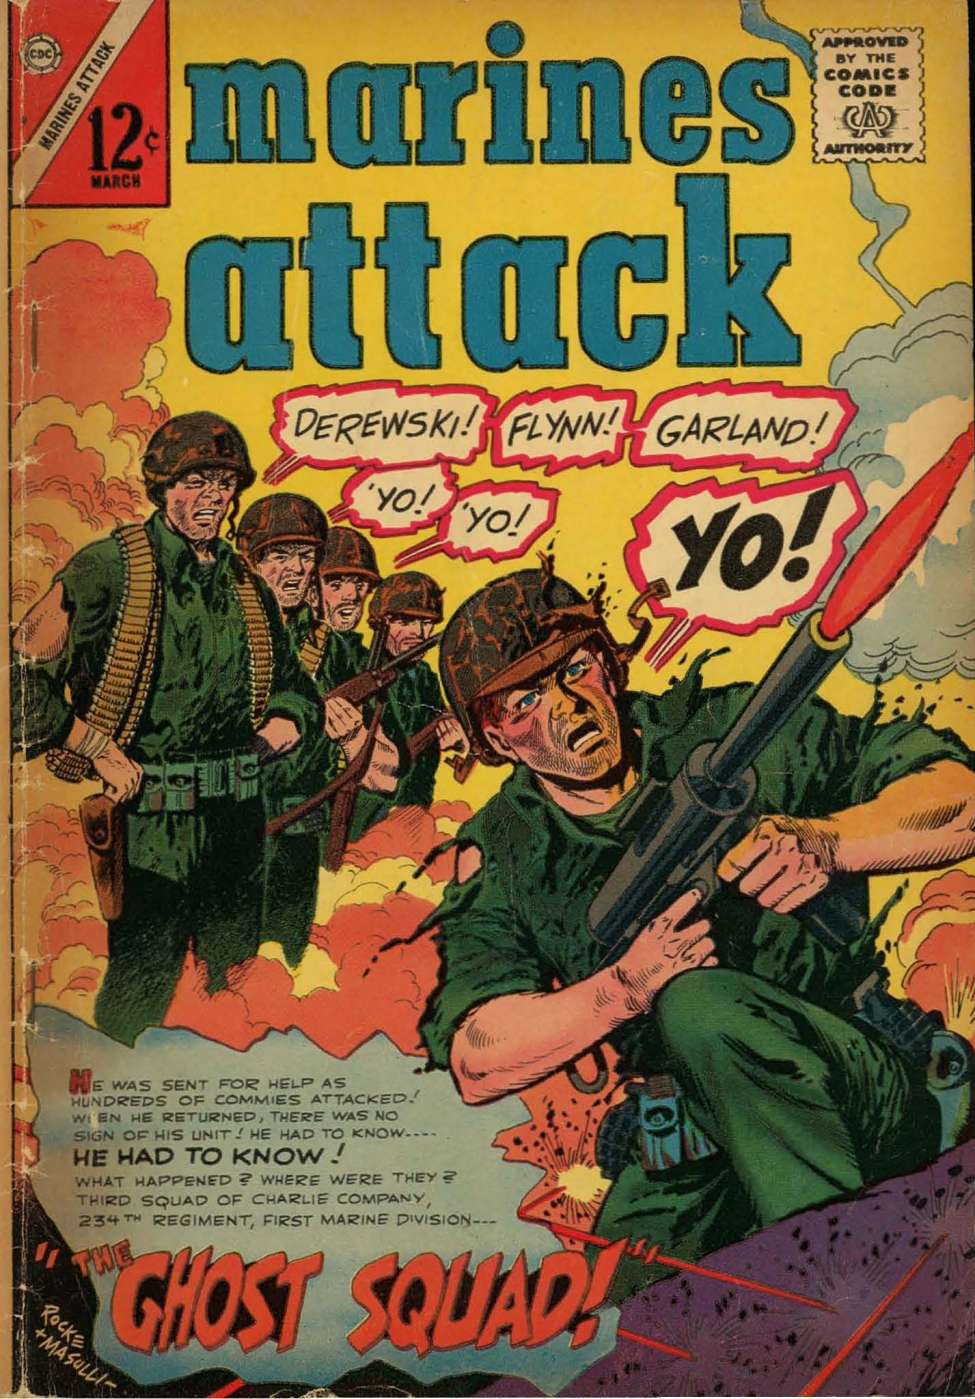 Marines Attack 9 (Charlton) - Comic Book Plus